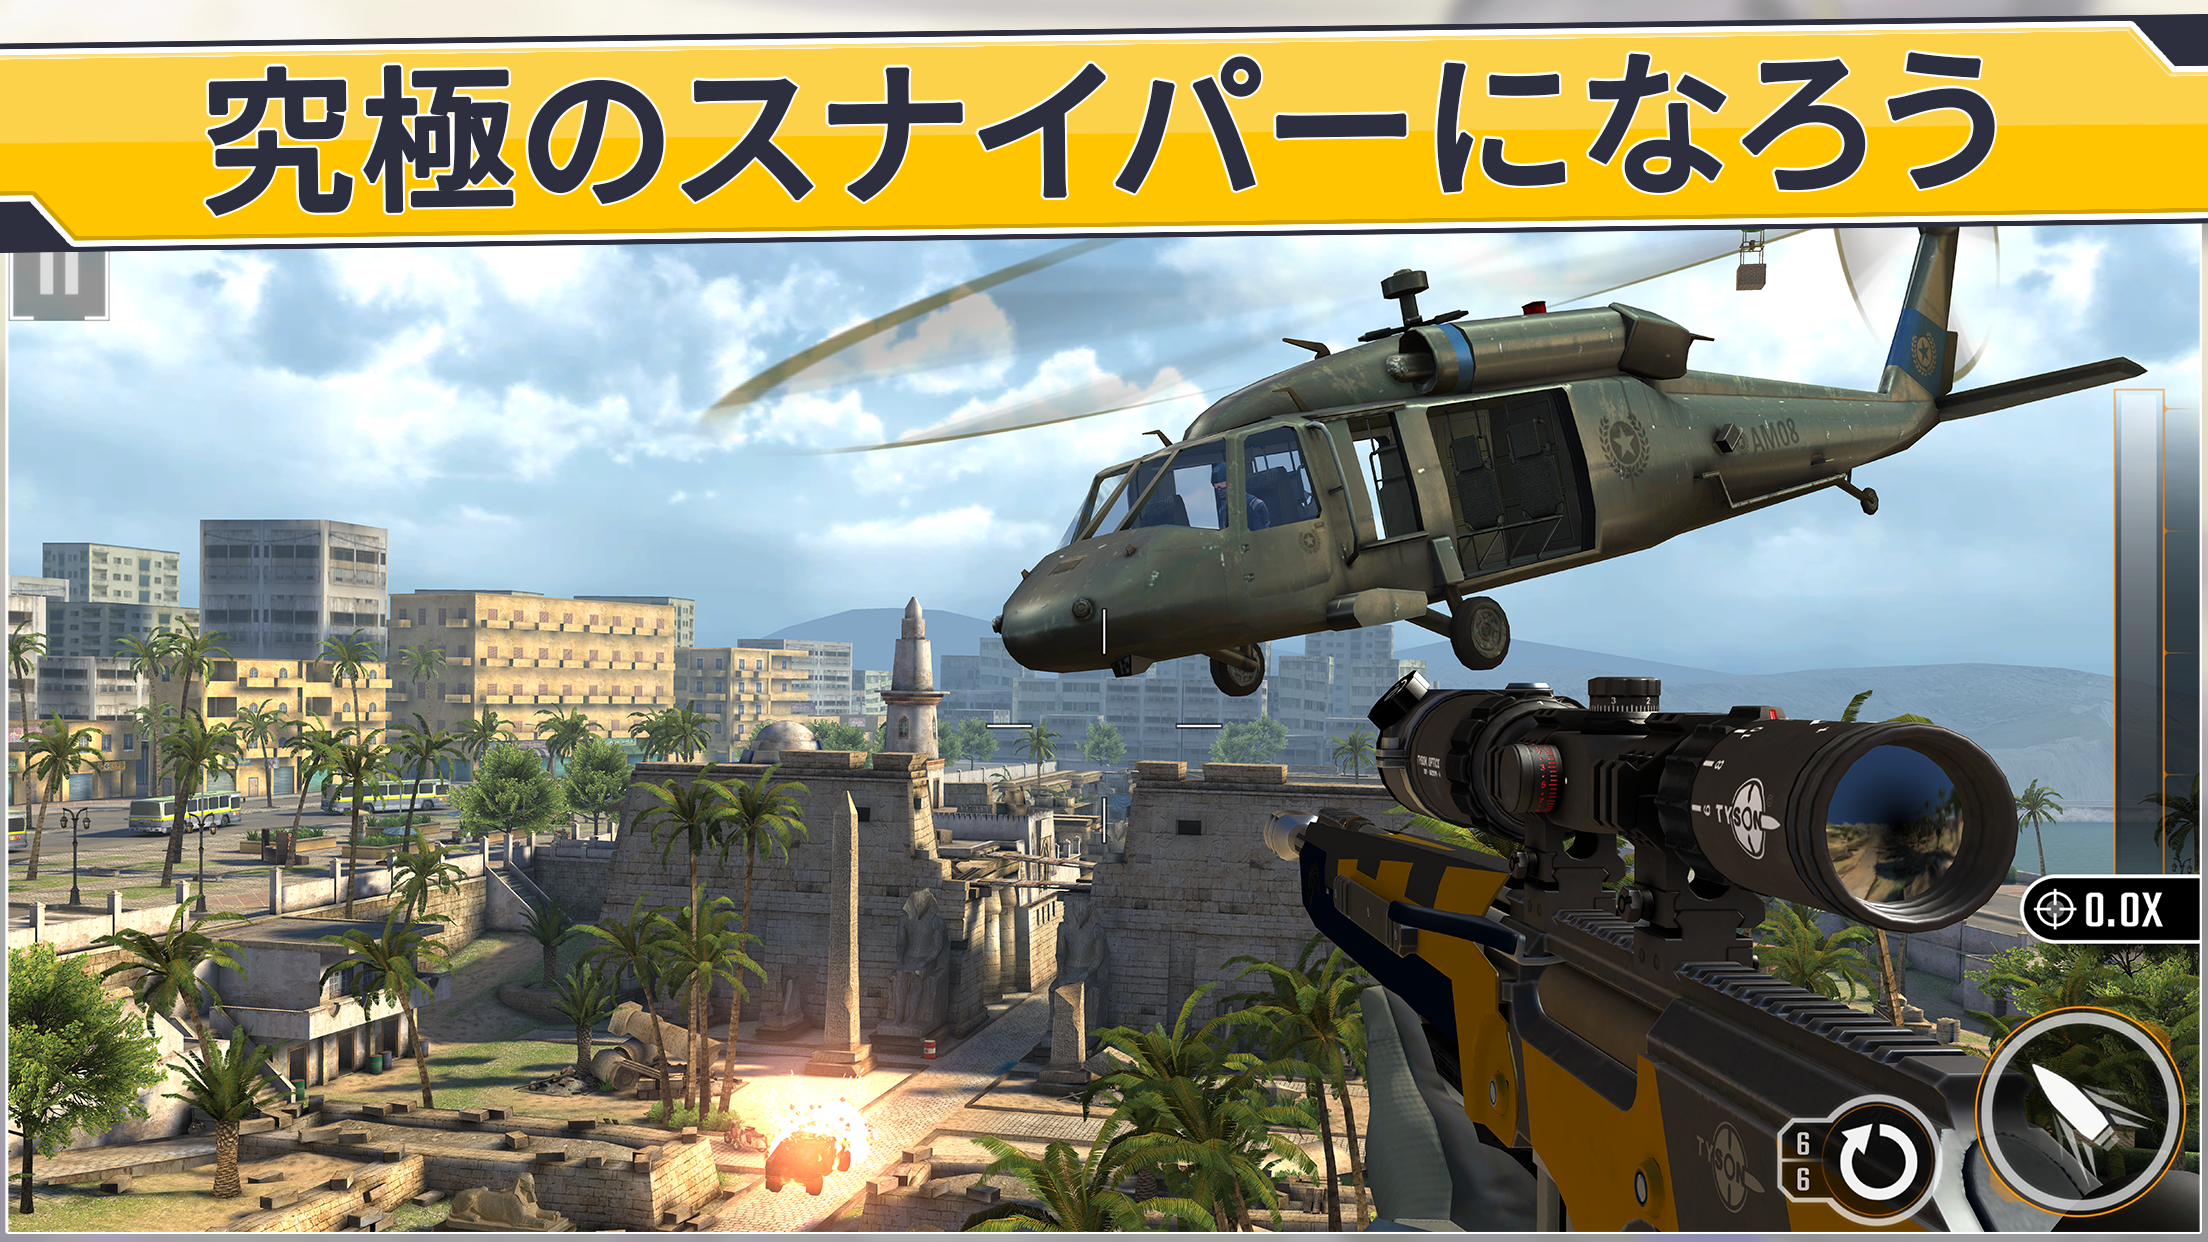 Screenshot 1 of Sniper Strike 人称視点3Dシューティングゲーム 500171